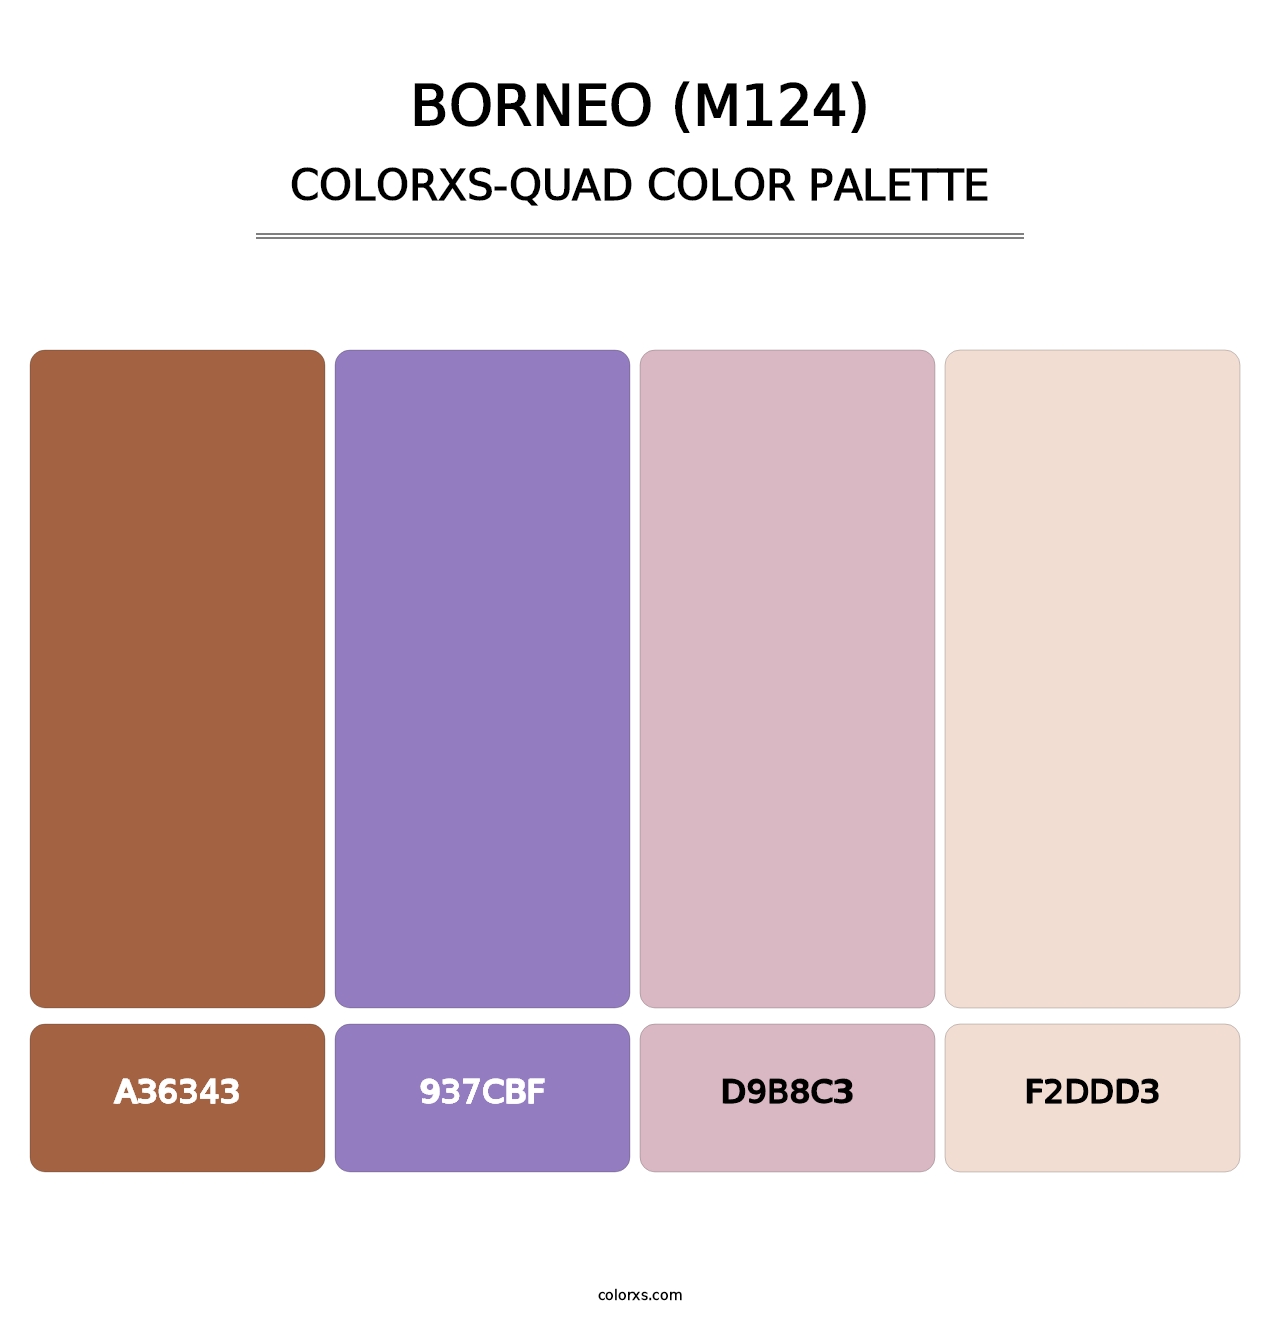 Borneo (M124) - Colorxs Quad Palette